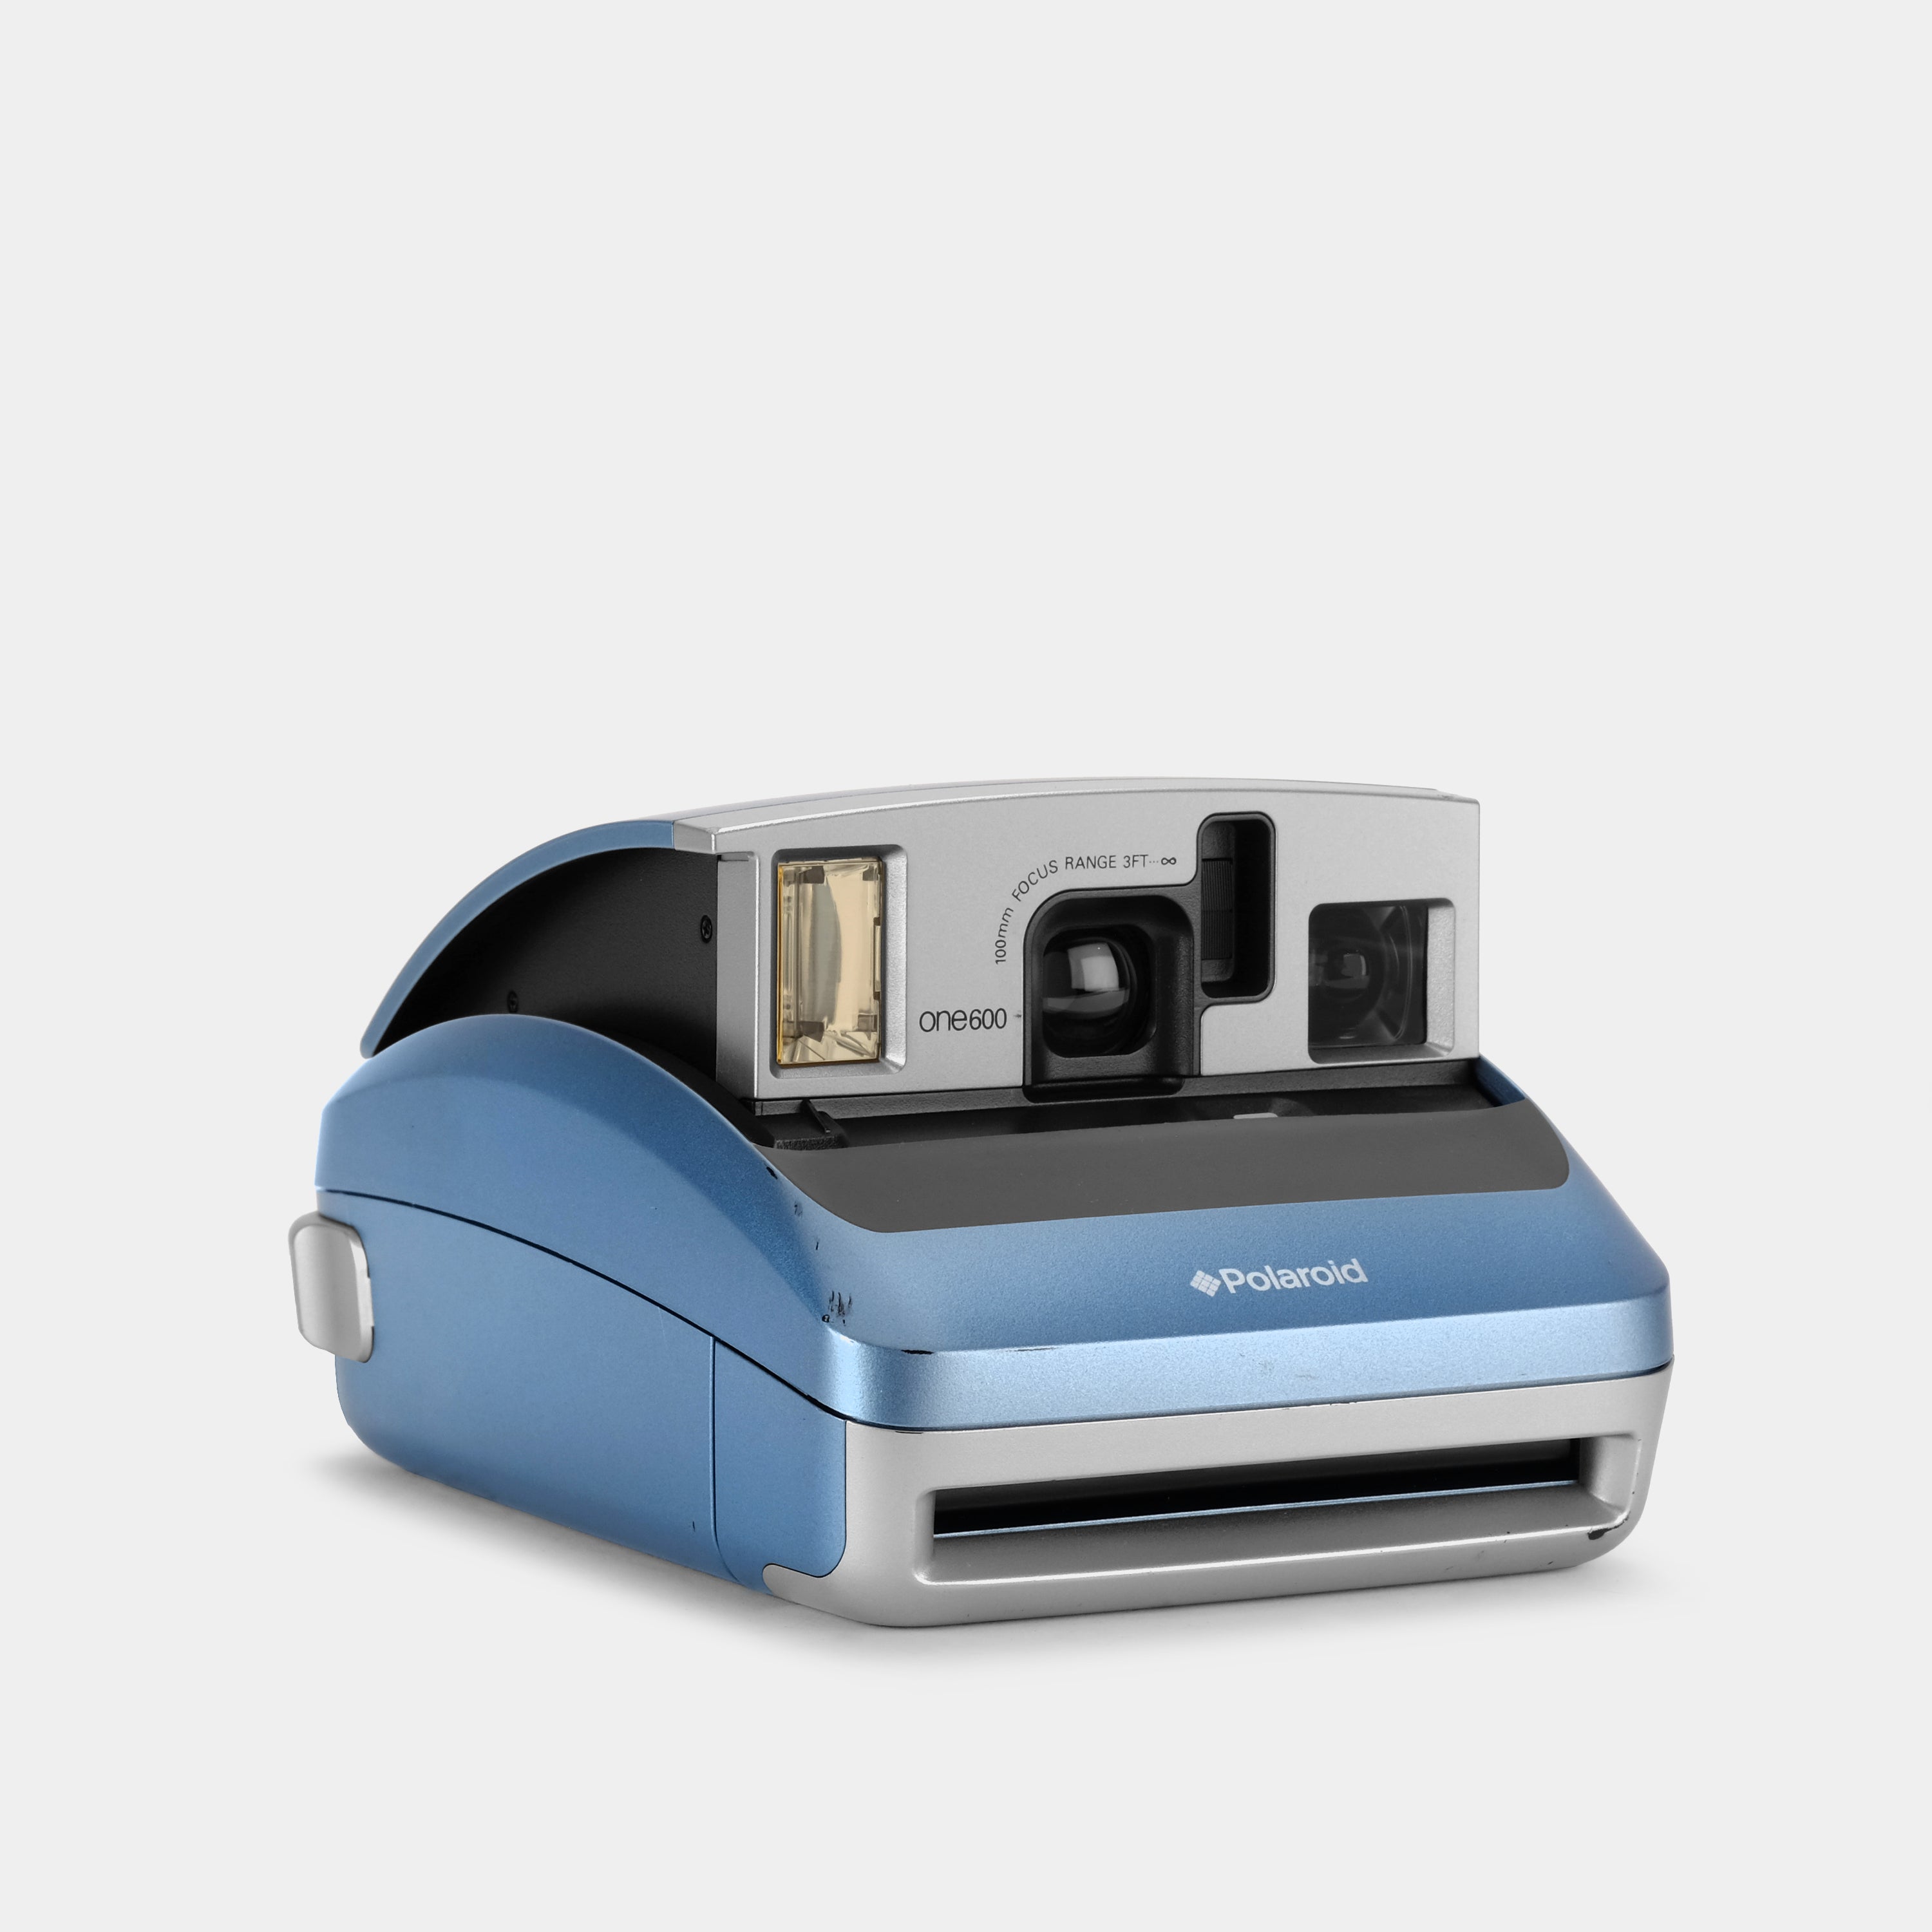 Polaroid 600 One600 Blue Instant Film Camera